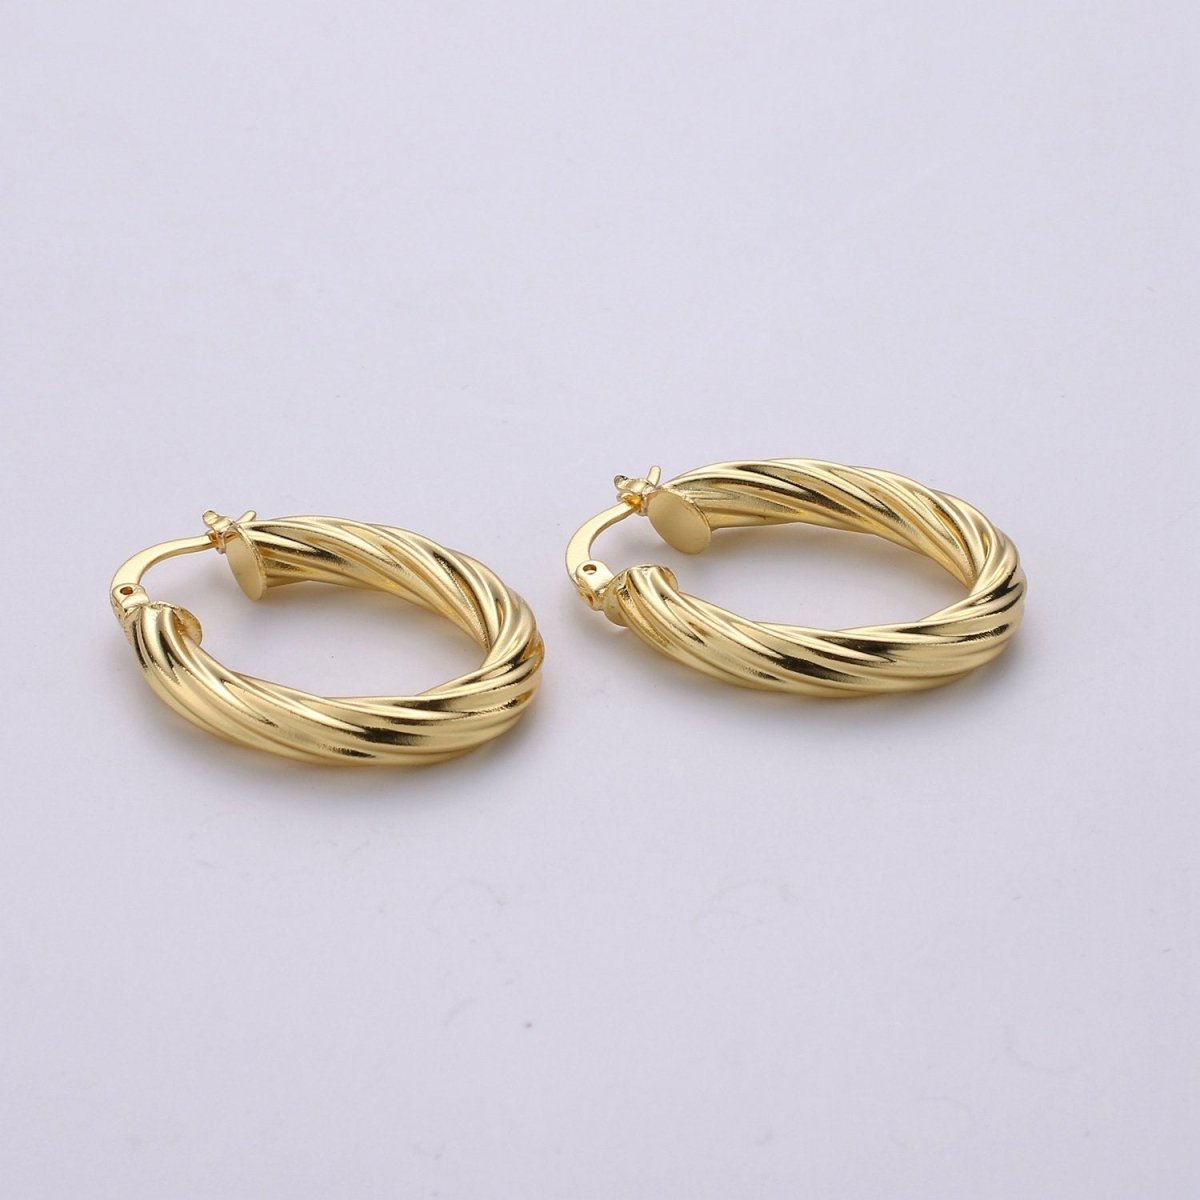 24k Vermeil Gold Earrings, Hoop Earrings, Small Hoop, Oval Rope Texture Earring, Gift for Her, Earrings for Women, Everyday Wear Earrings Q-529 - DLUXCA